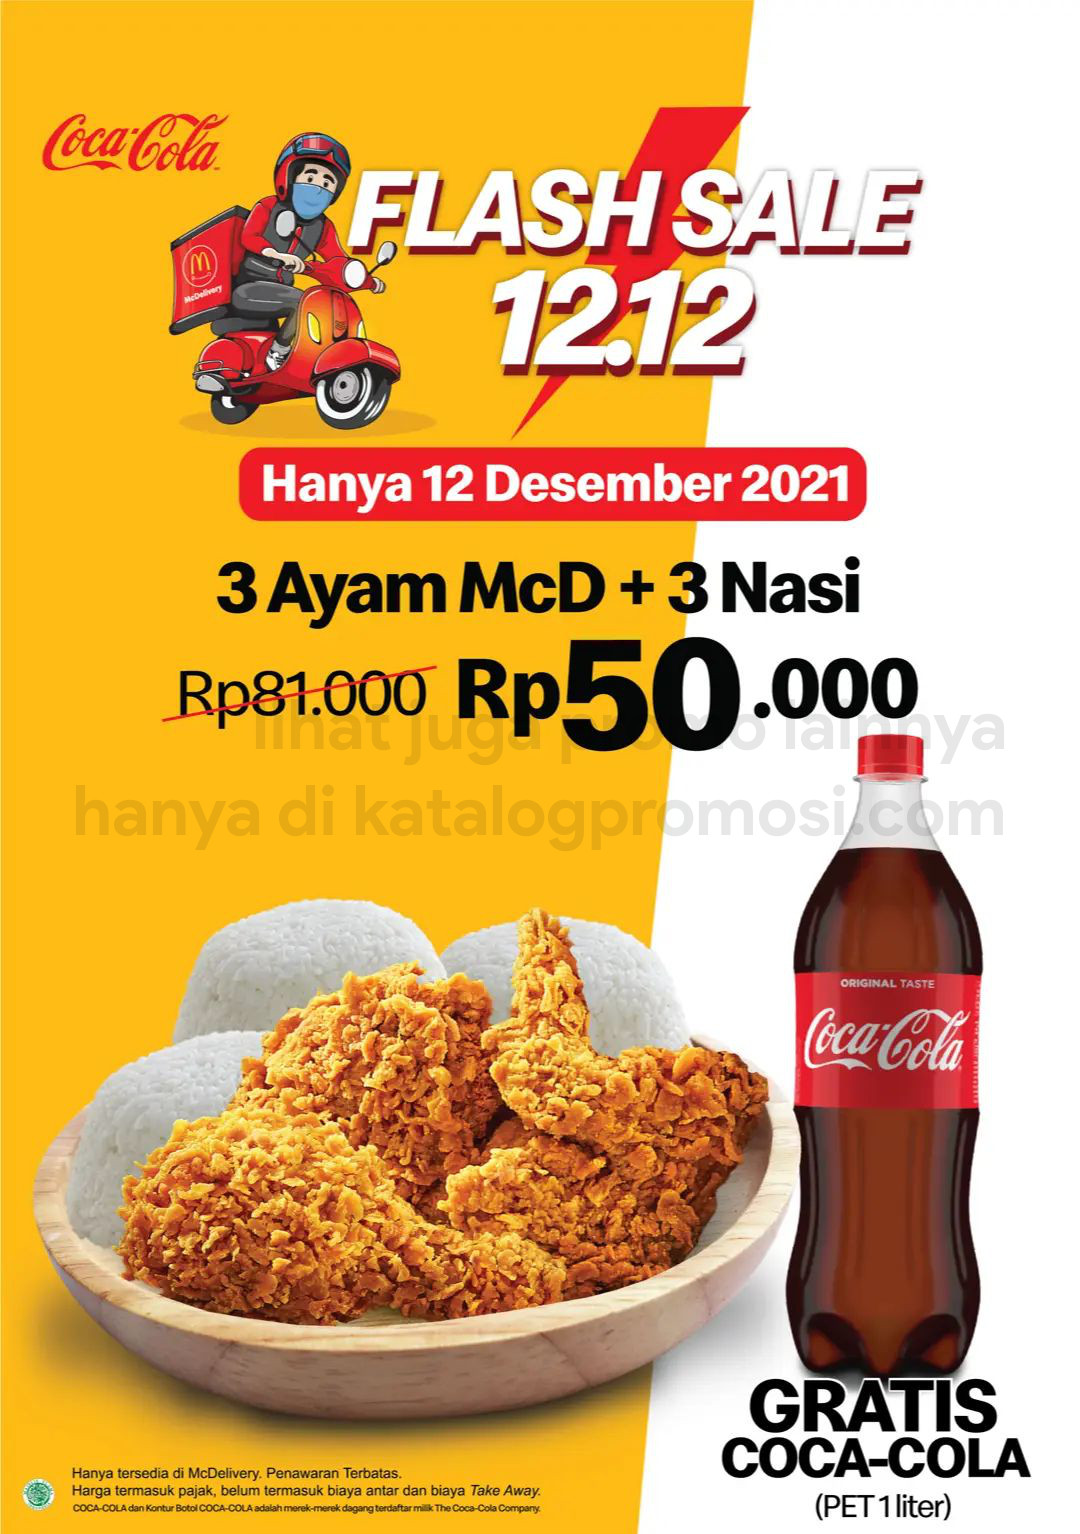 Promo McDonalds Flash Sale 12.12 - Paket 3 Ayam + 3 Nasi cuma Rp. 50.000 GRATIS Coca Cola Pet 1 Liter